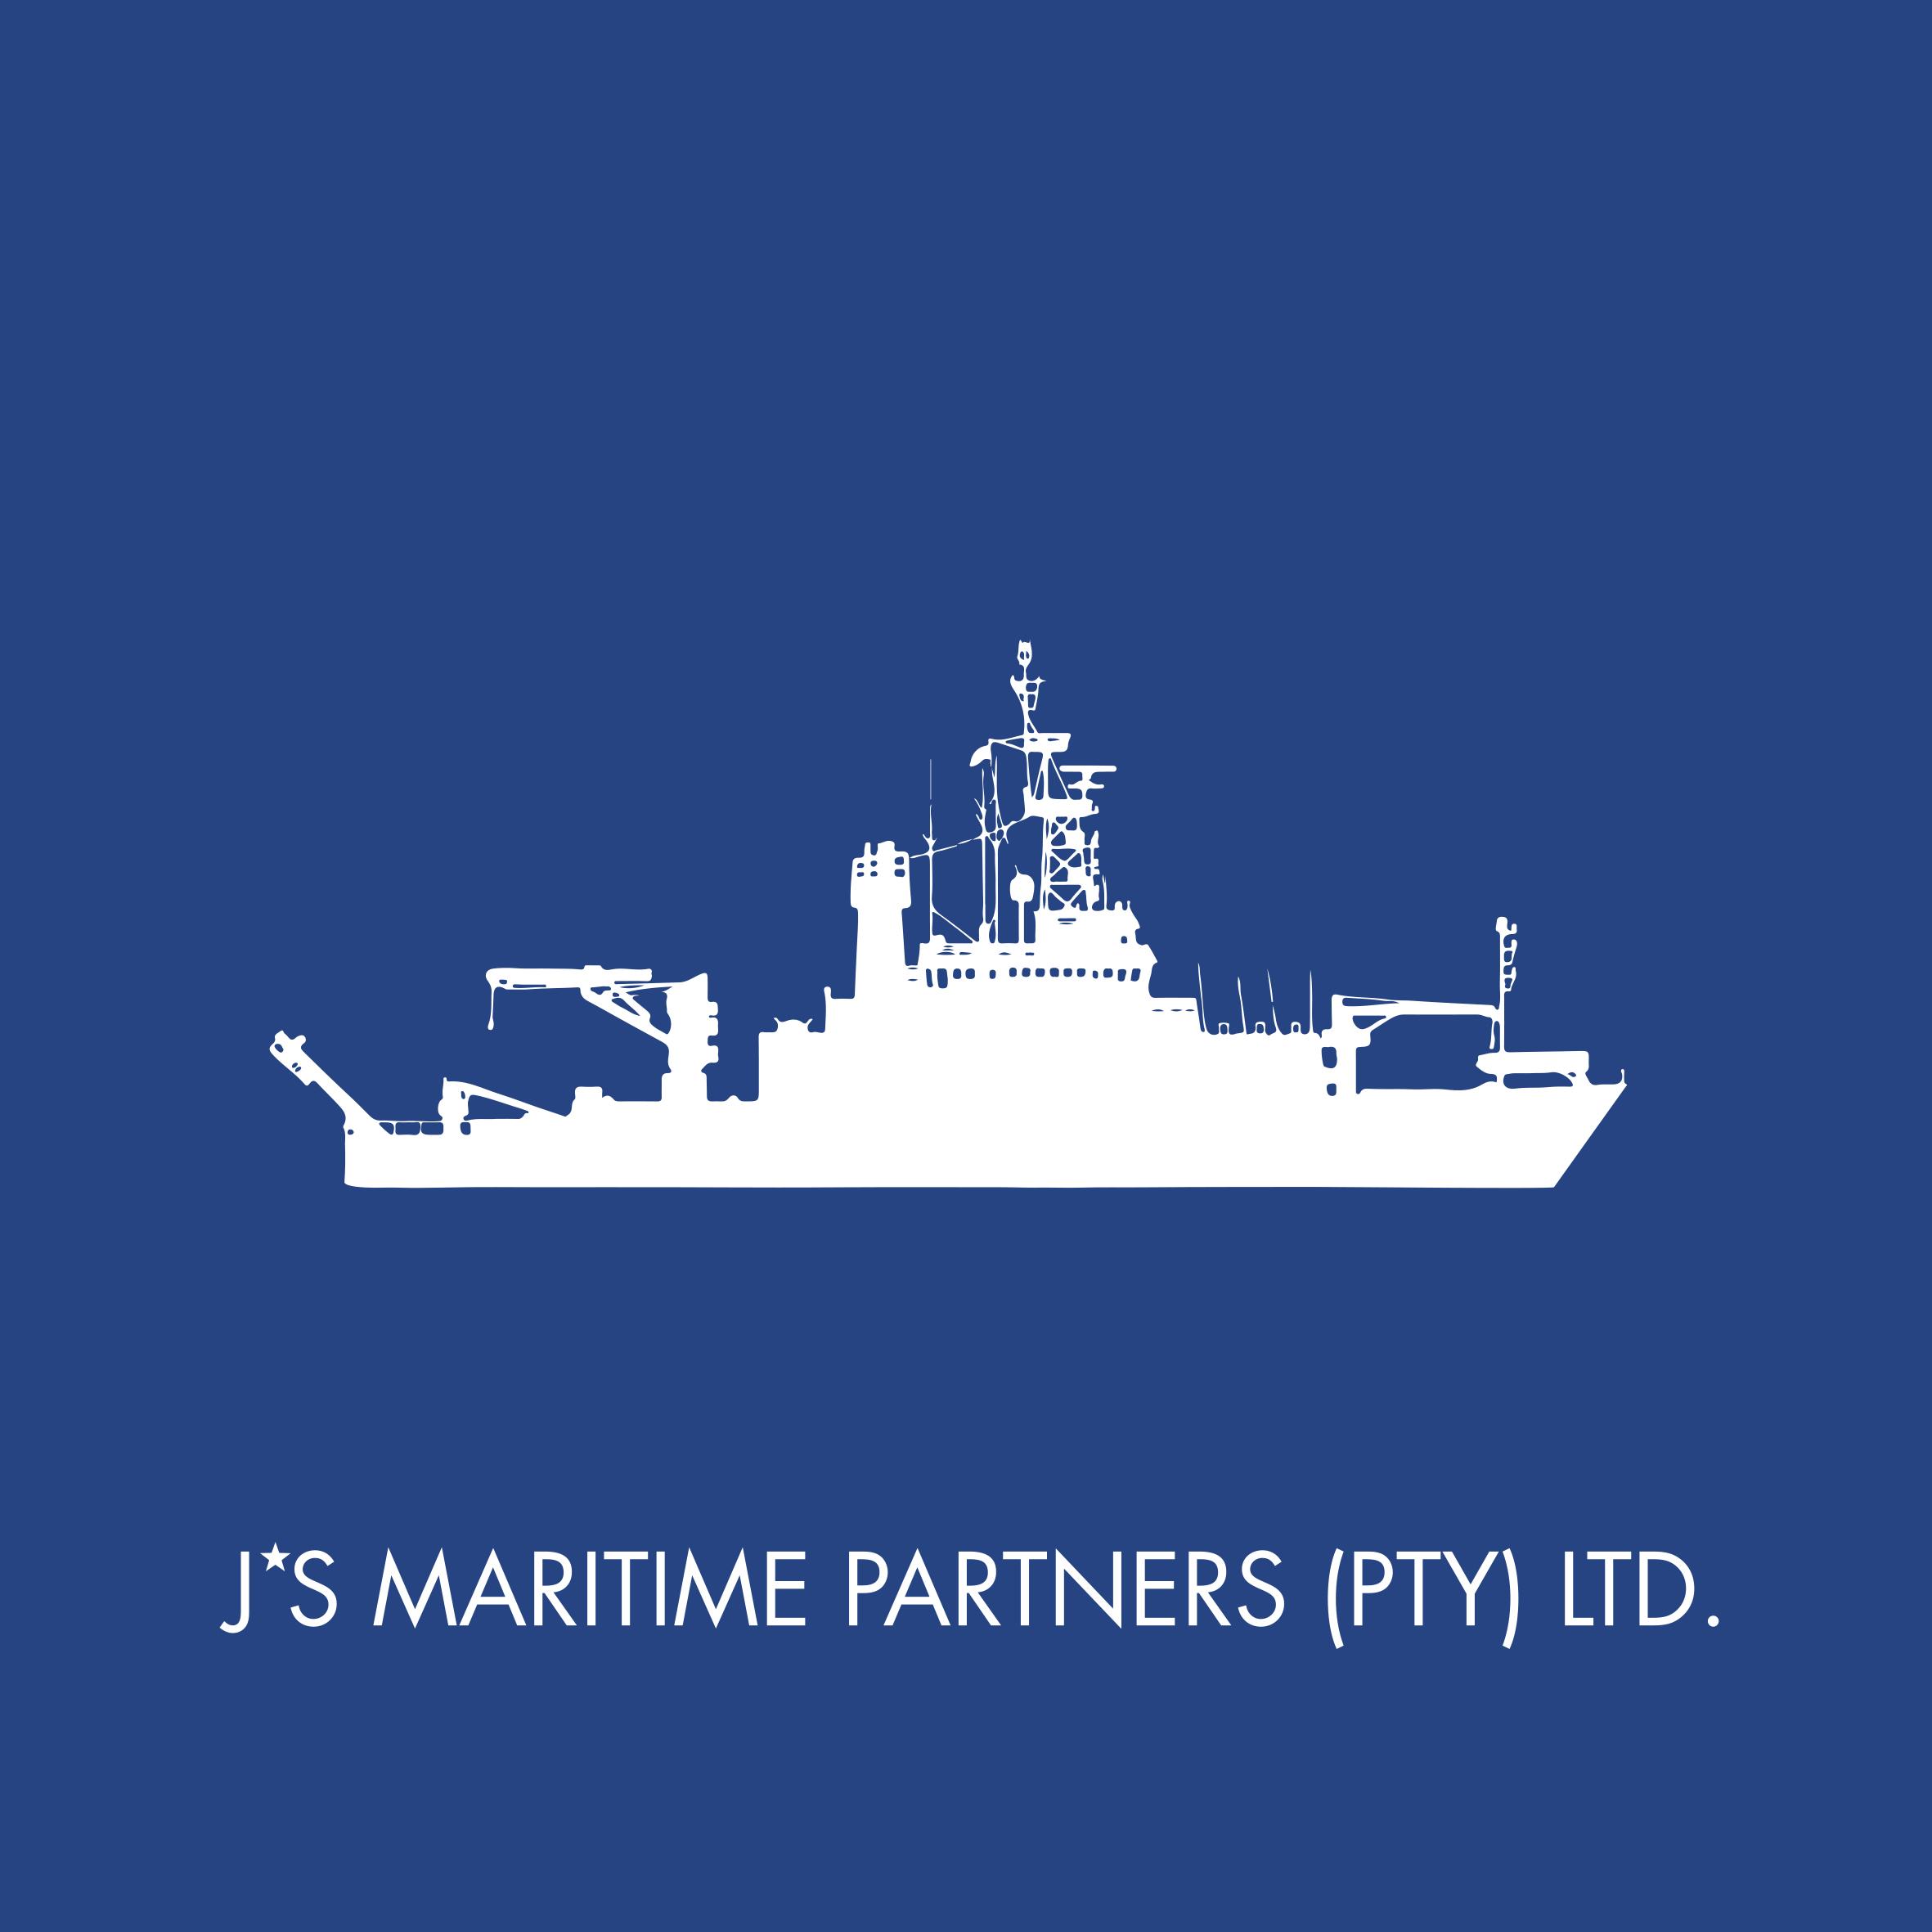 UNIQUEFIVE Werbeagentur Hamburg Heidelberg Referenz JS Maritime Partners